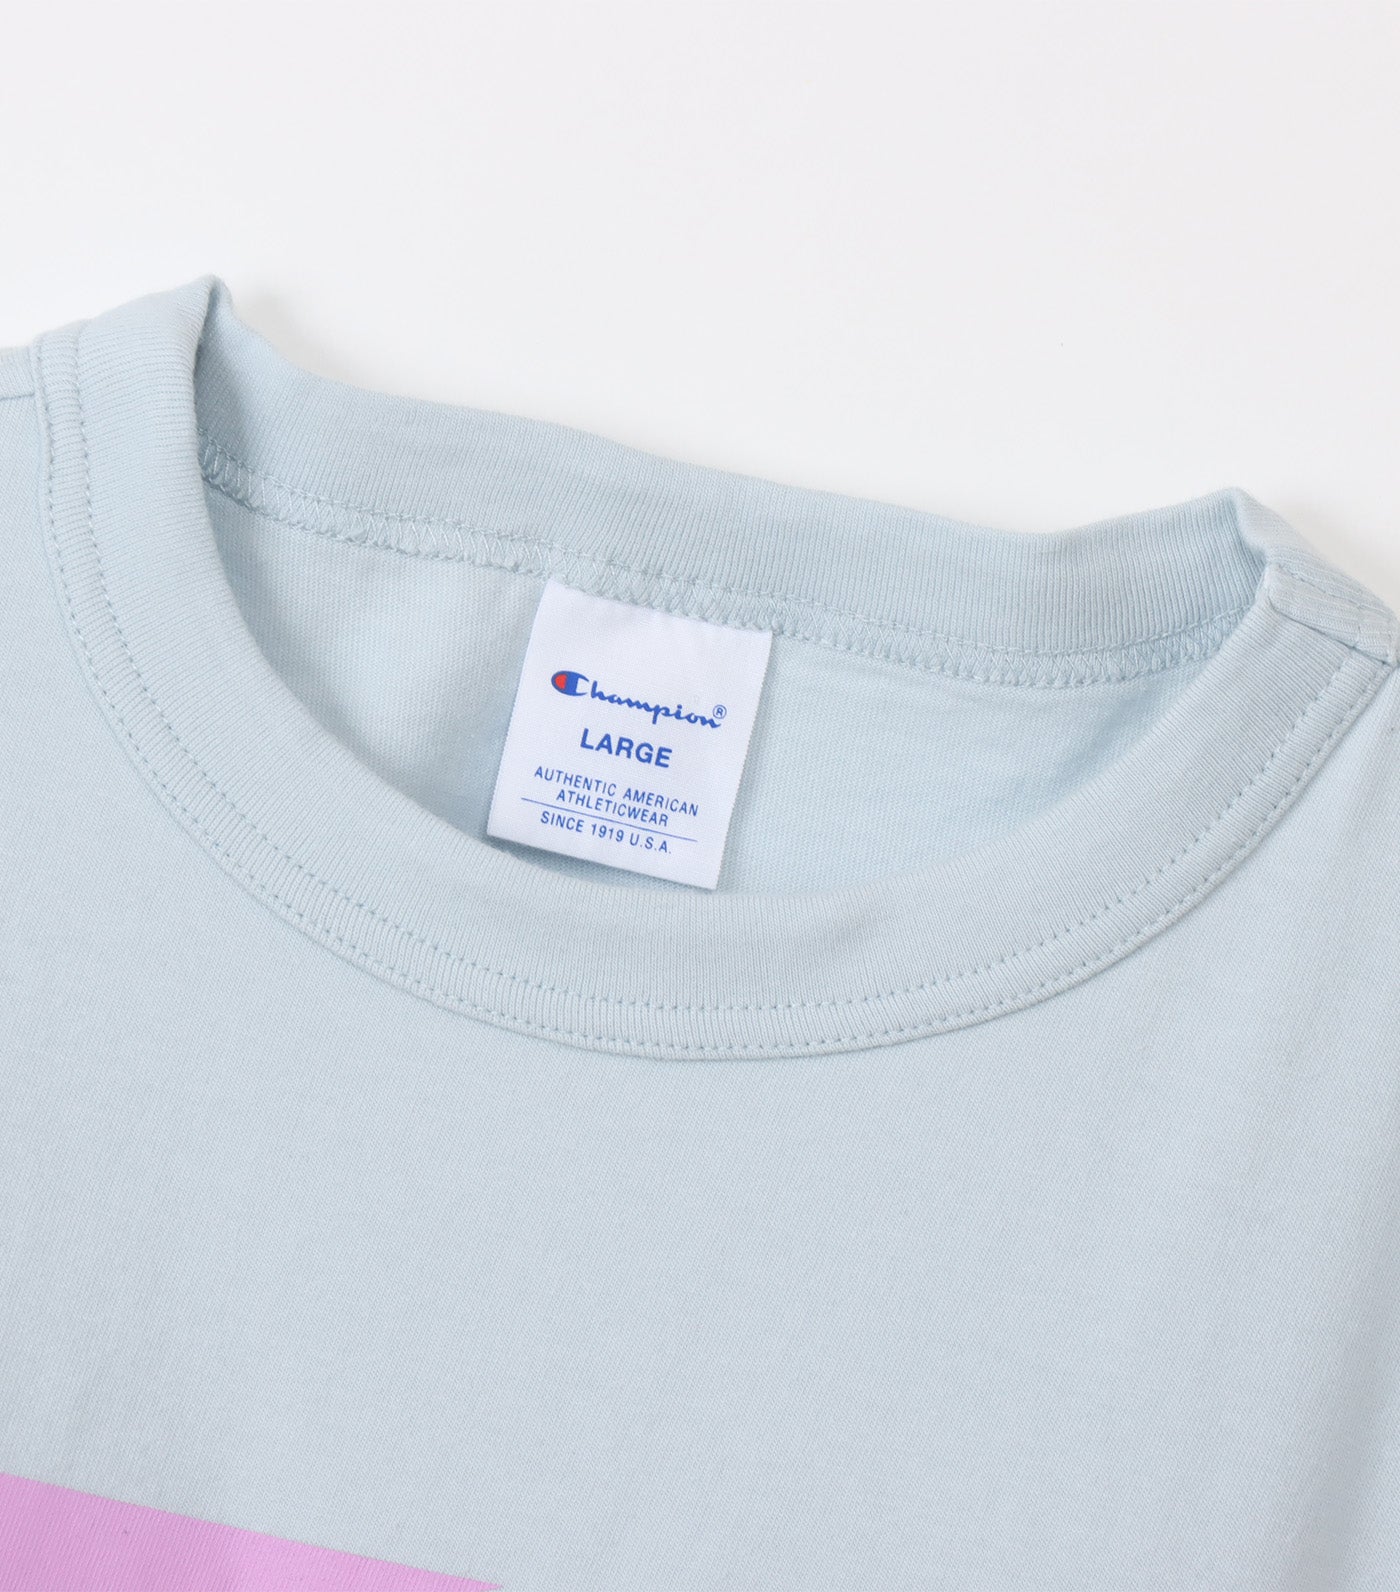 Japan Line Short Sleeve T-shirt Pale Blue